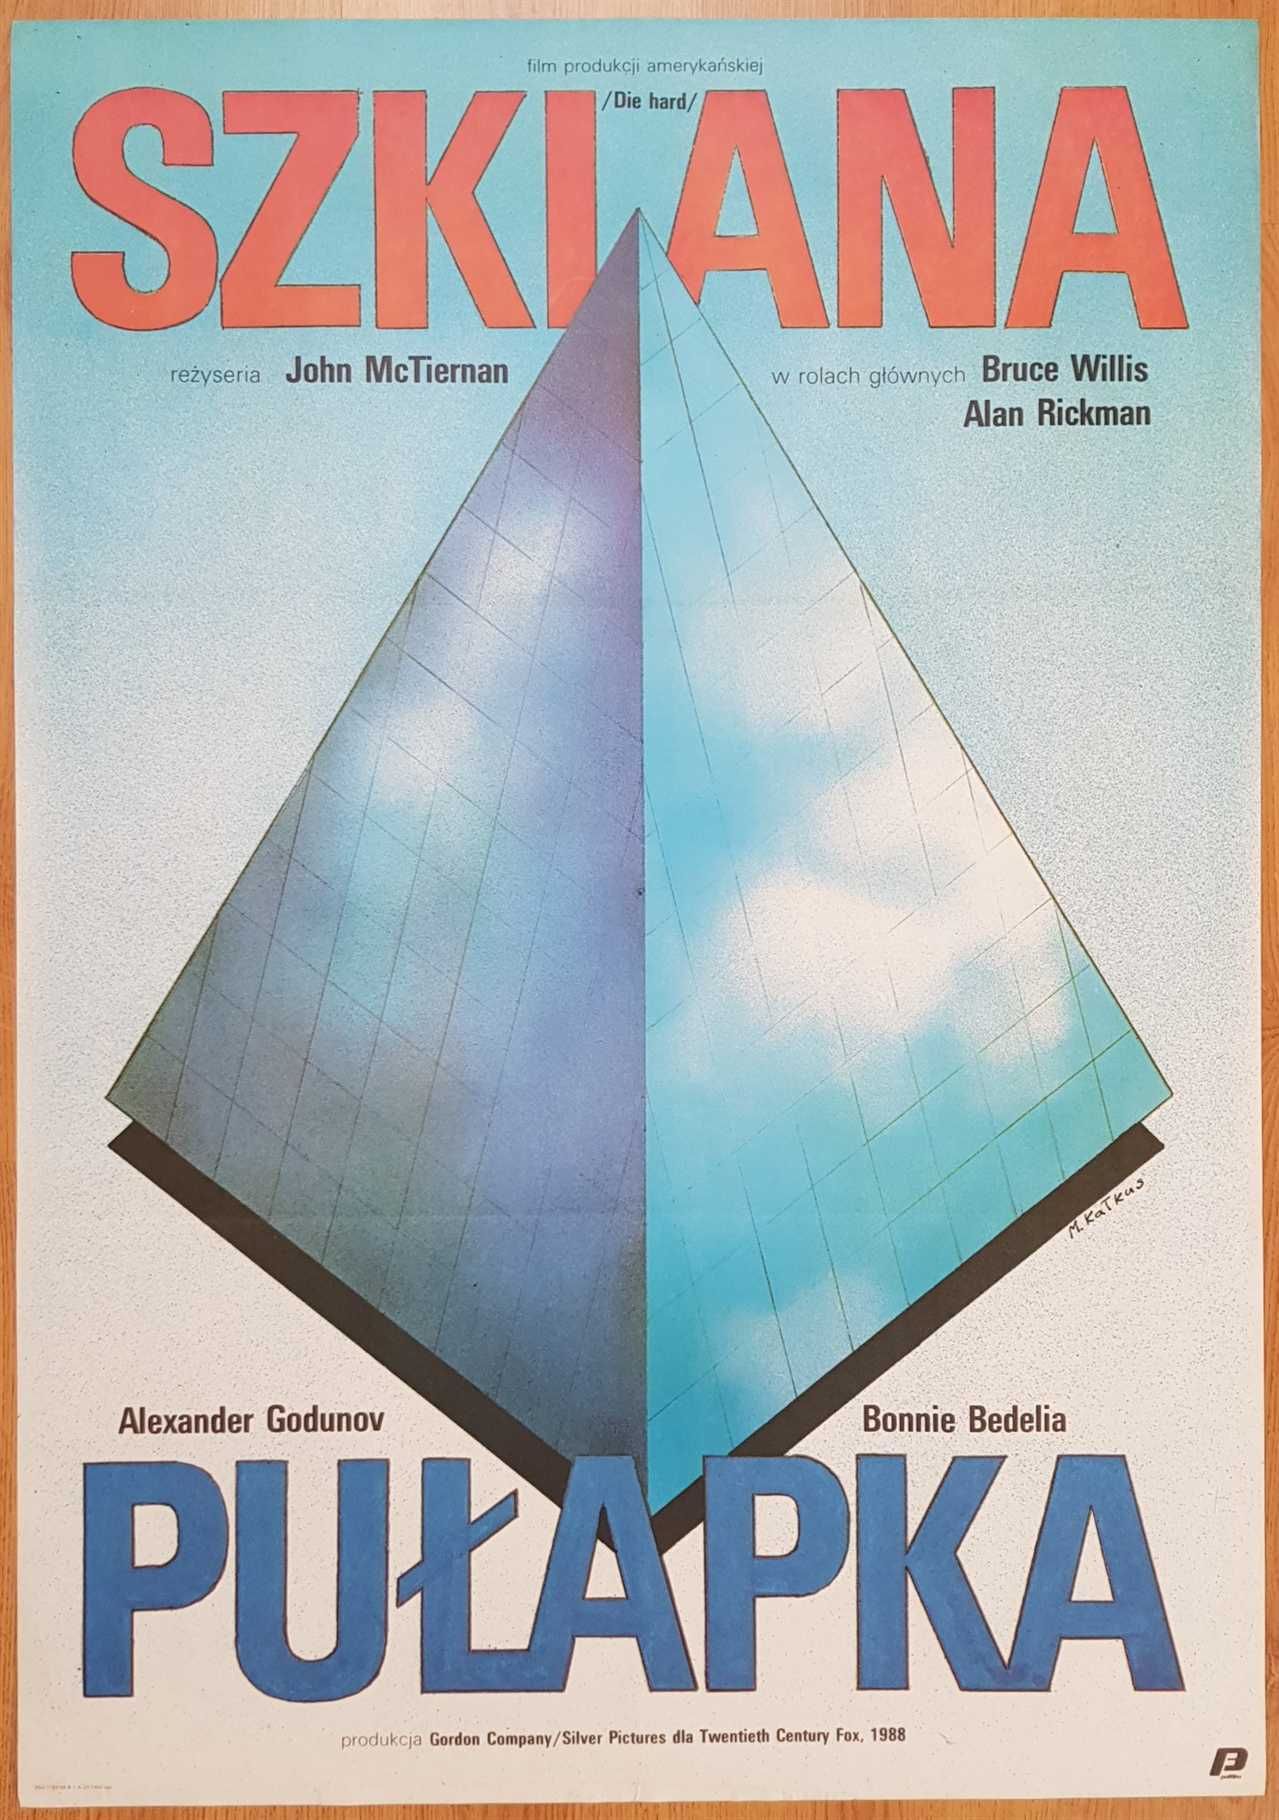 Szklana pułapka 1989 ORYGINAŁ plakat film Kałkus  RARE